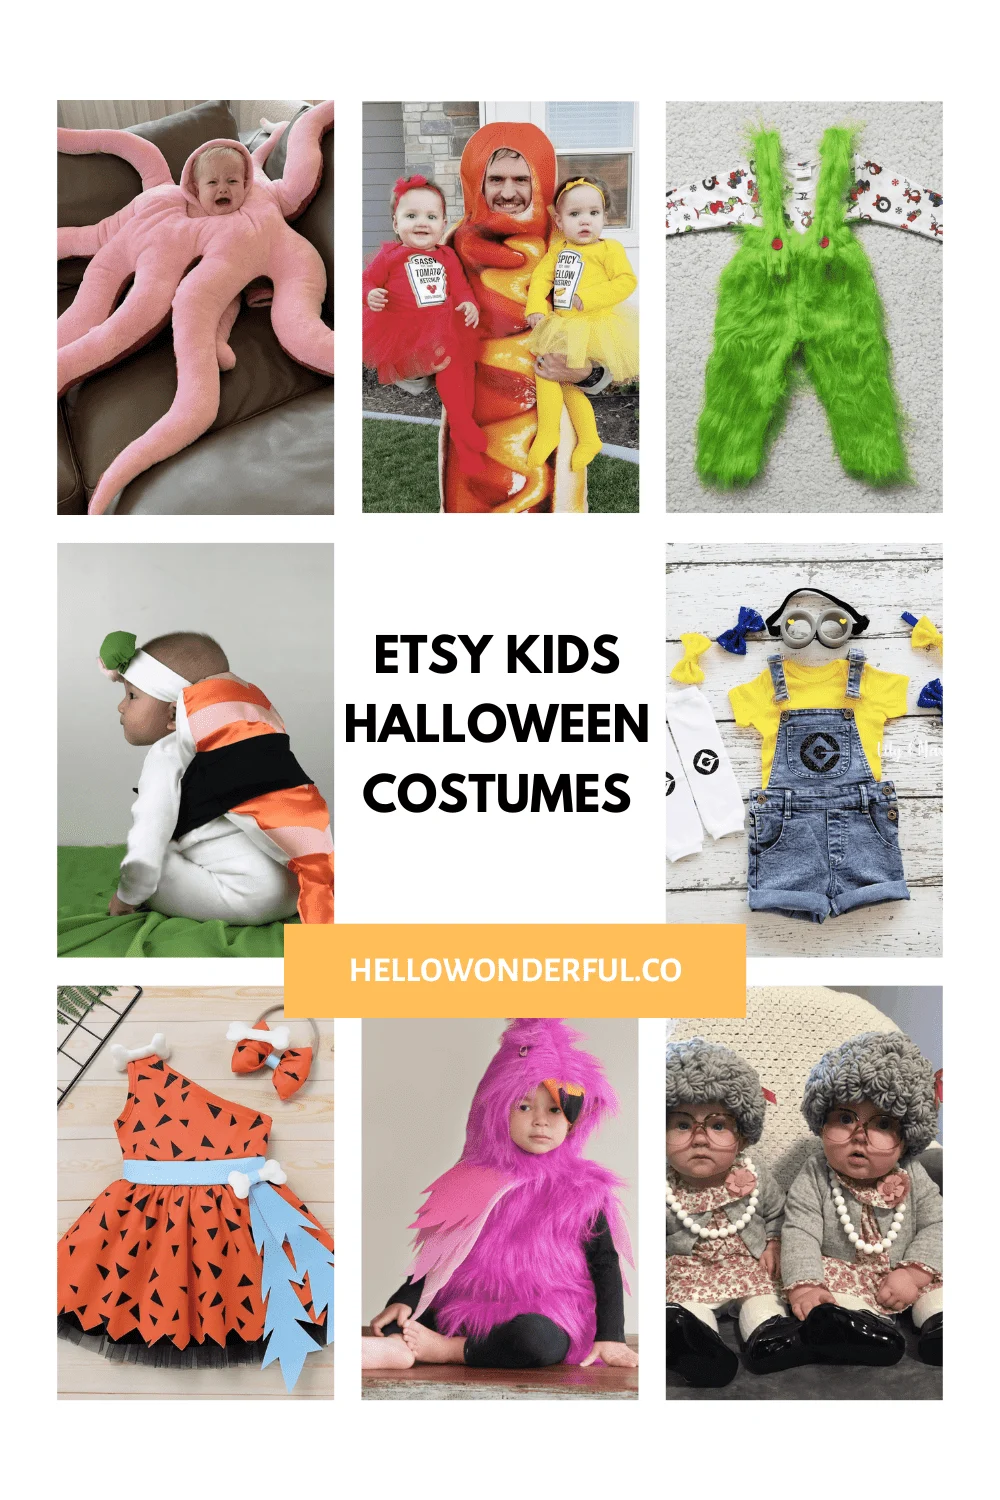 Etsy Kids Halloween costumes